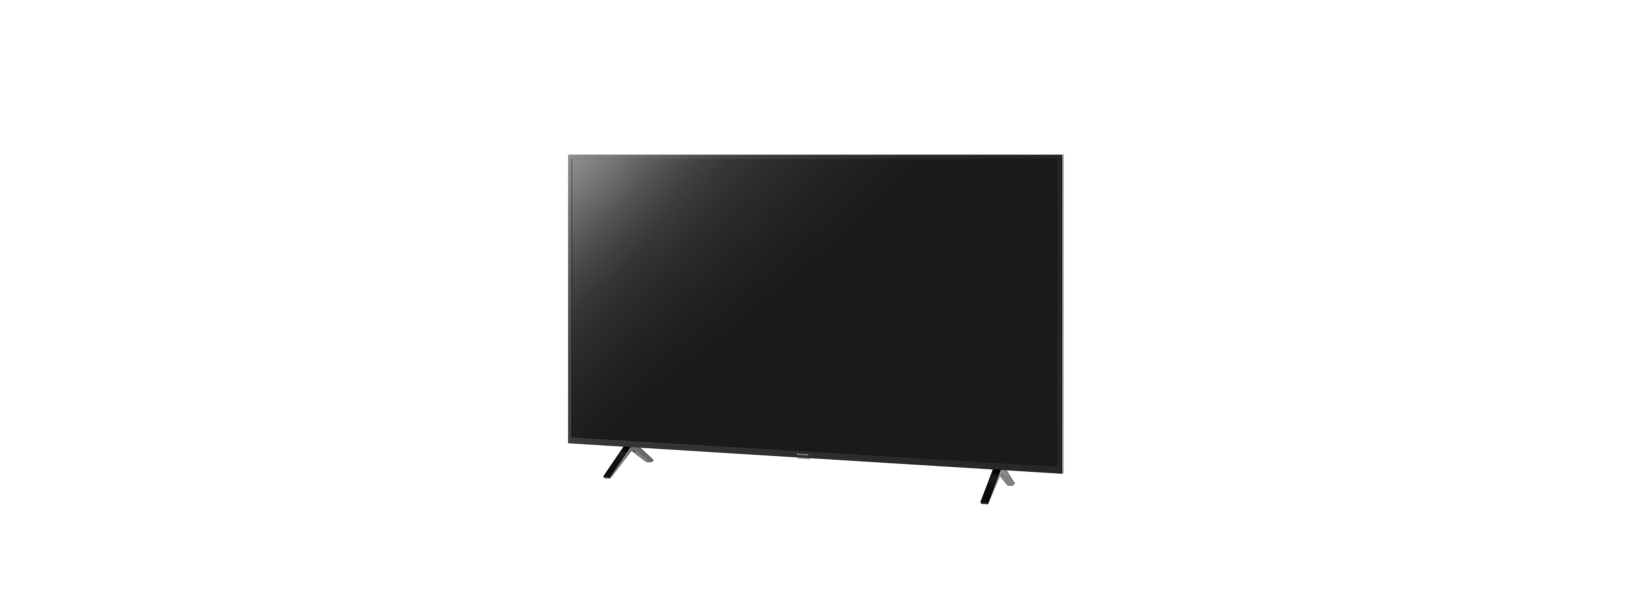 Panasonic TX-65LXW704 - 164 cm (65") Diagonalklasse LXW704 Series LCD-TV mit LED-Hintergrundbeleuchtung - Smart TV - Android TV - 4K UHD (2160p)